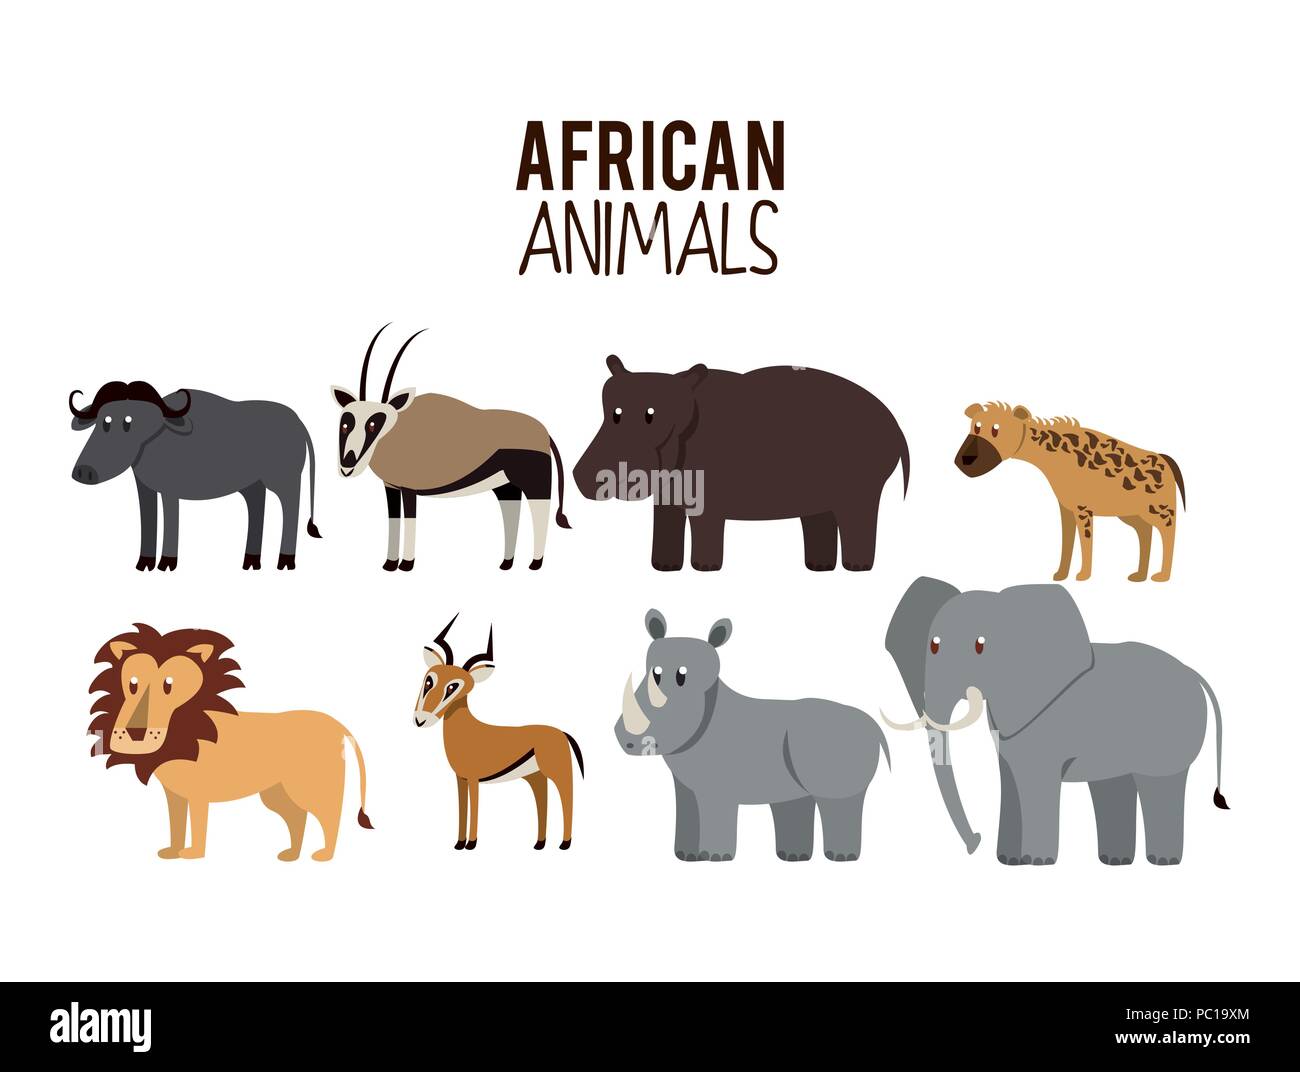 African Animals Cartoon Stock Vector Image Art Alamy #alamy #alamy stock photo #stock photo #photograph. https www alamy com african animals cartoon image213930044 html